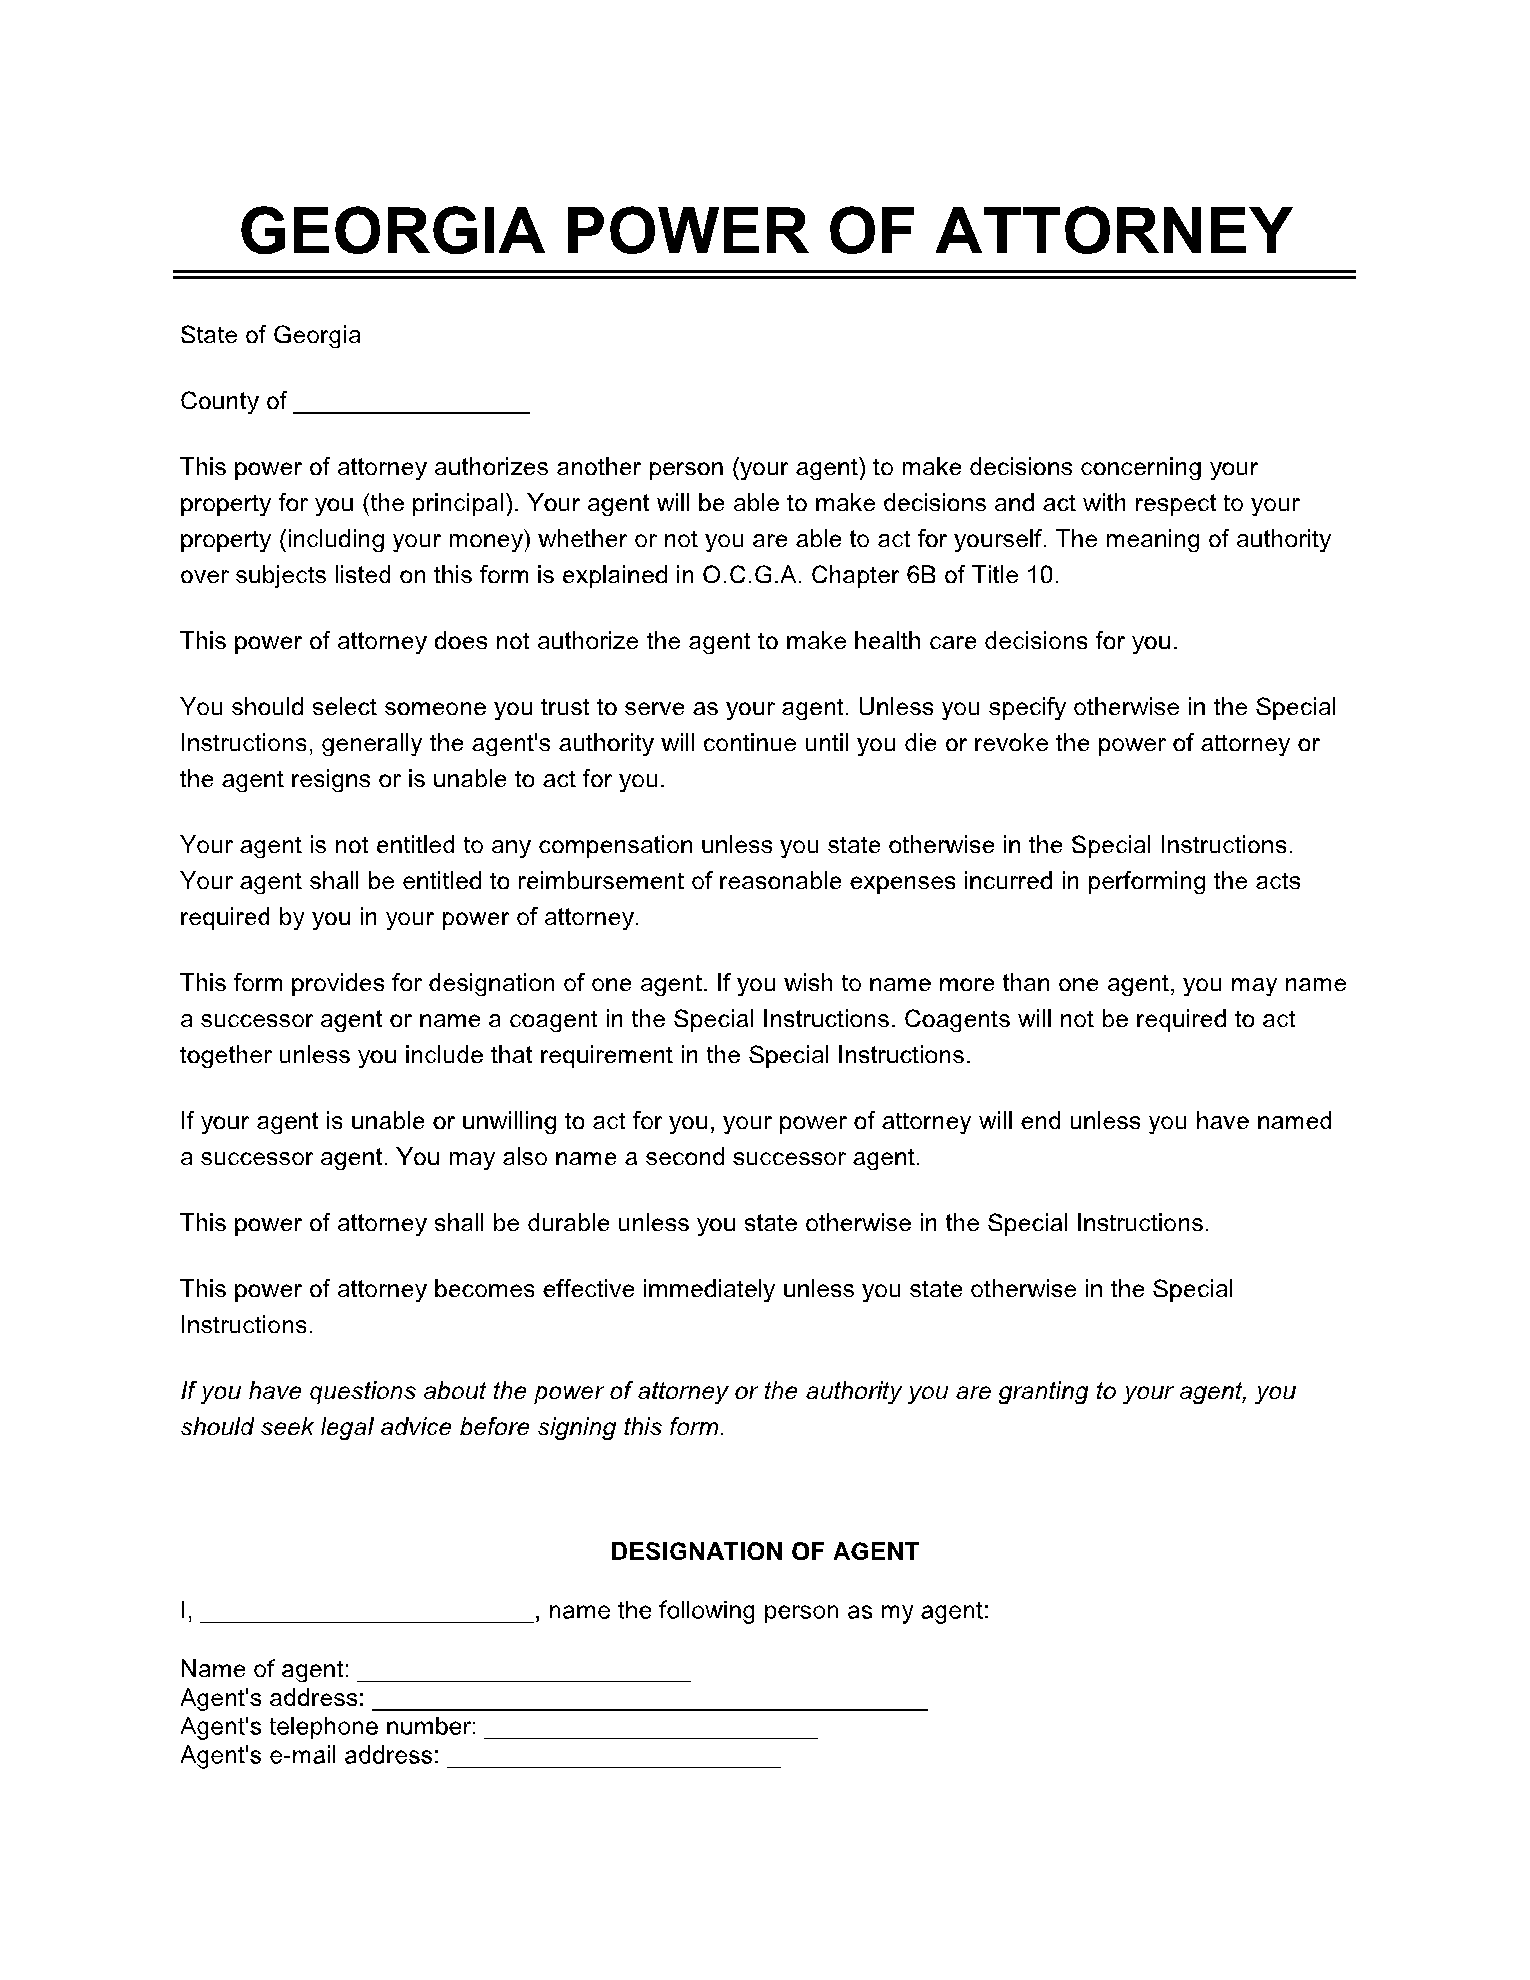 Power of Attorney Georgia